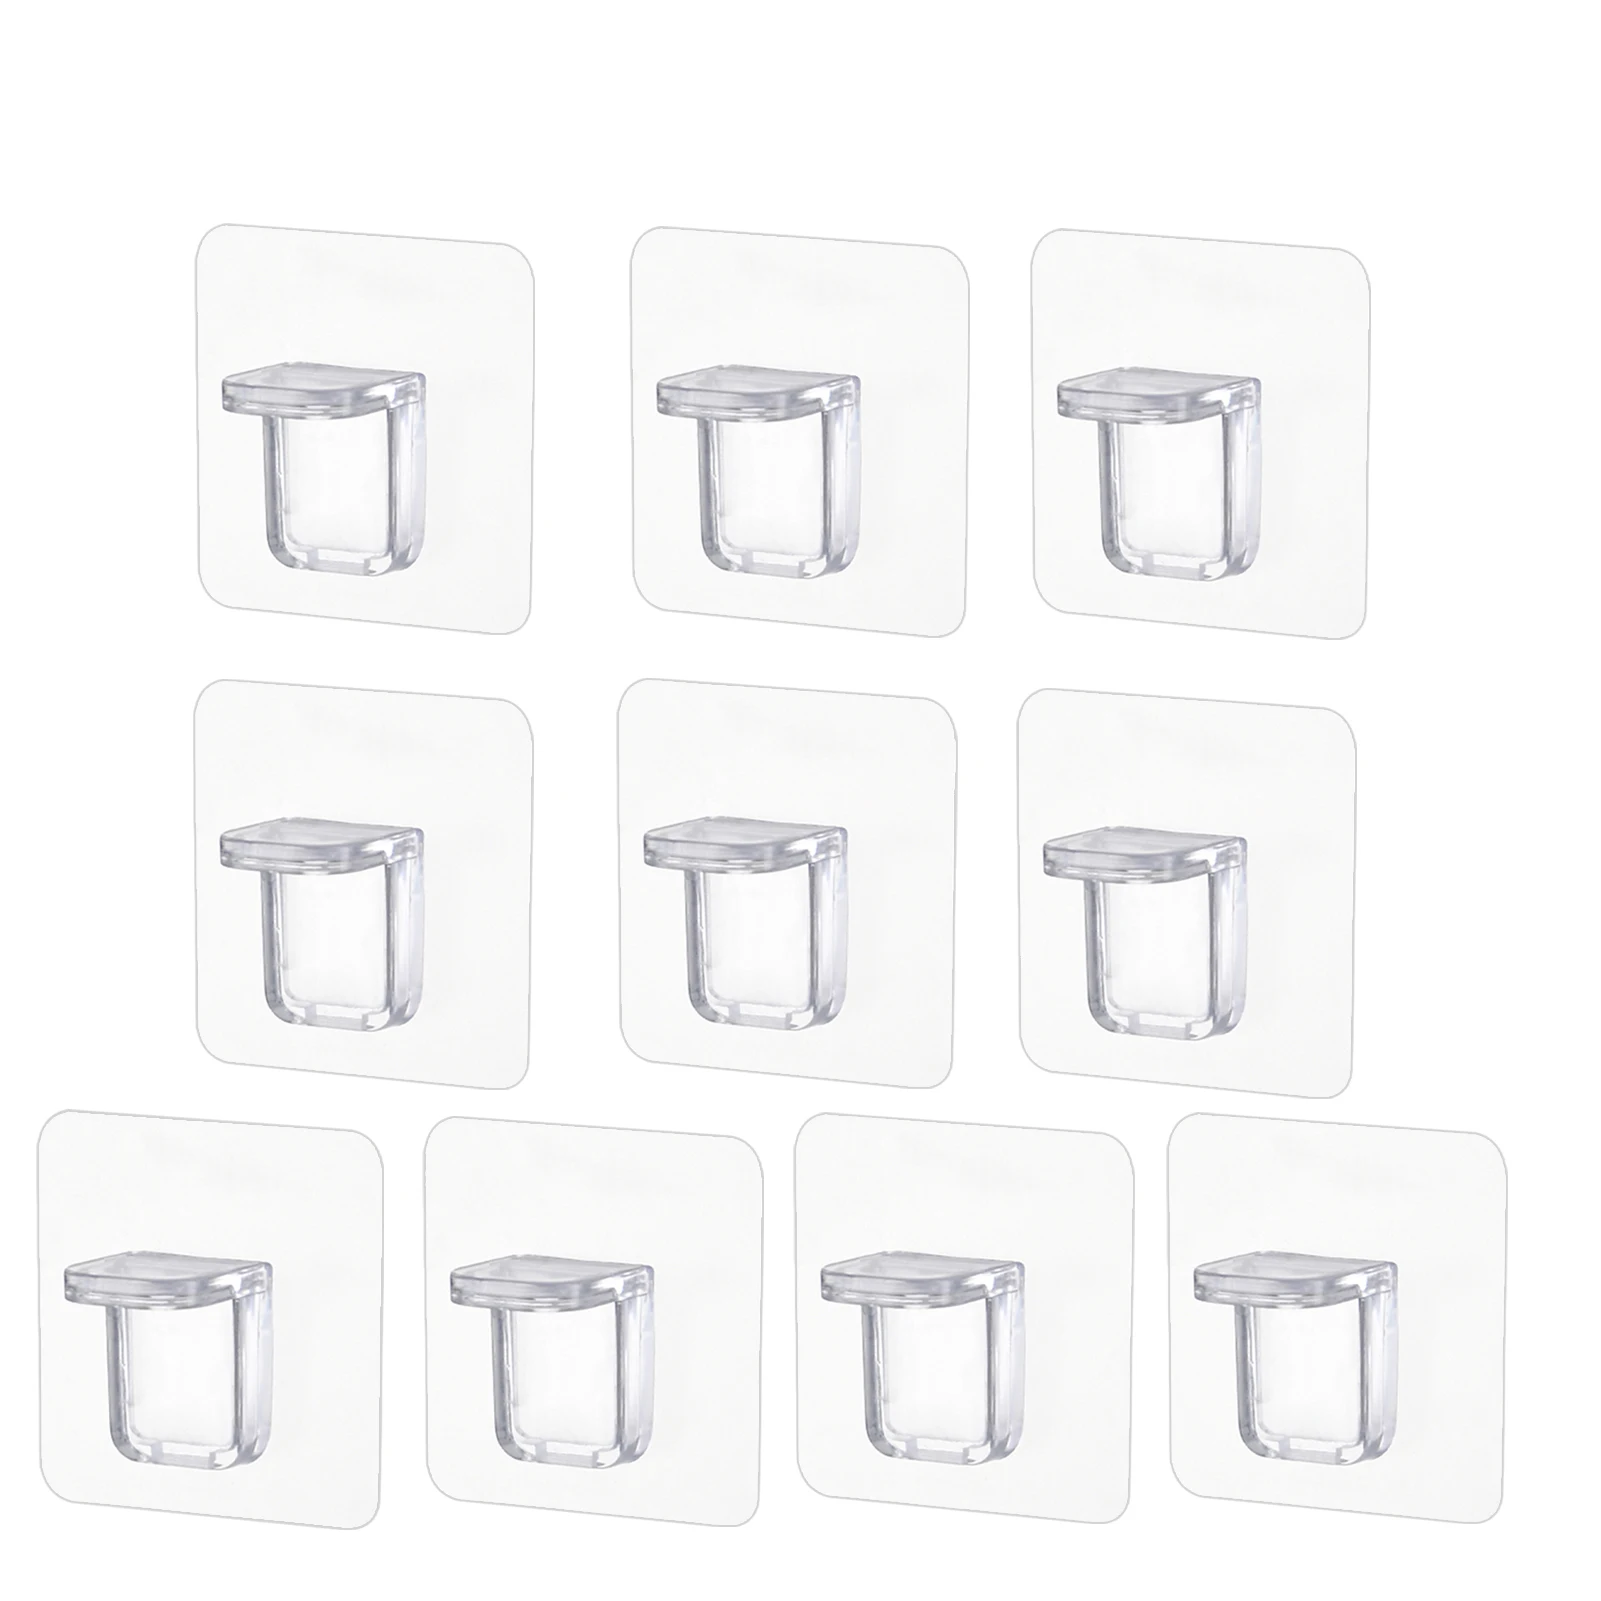 

10Pcs Shelf Support Adhesive Peg Plastic Closet Cabinet Shelf Holder Clips Punch-free Wall Hanger Kitchen Bathroom Accessories